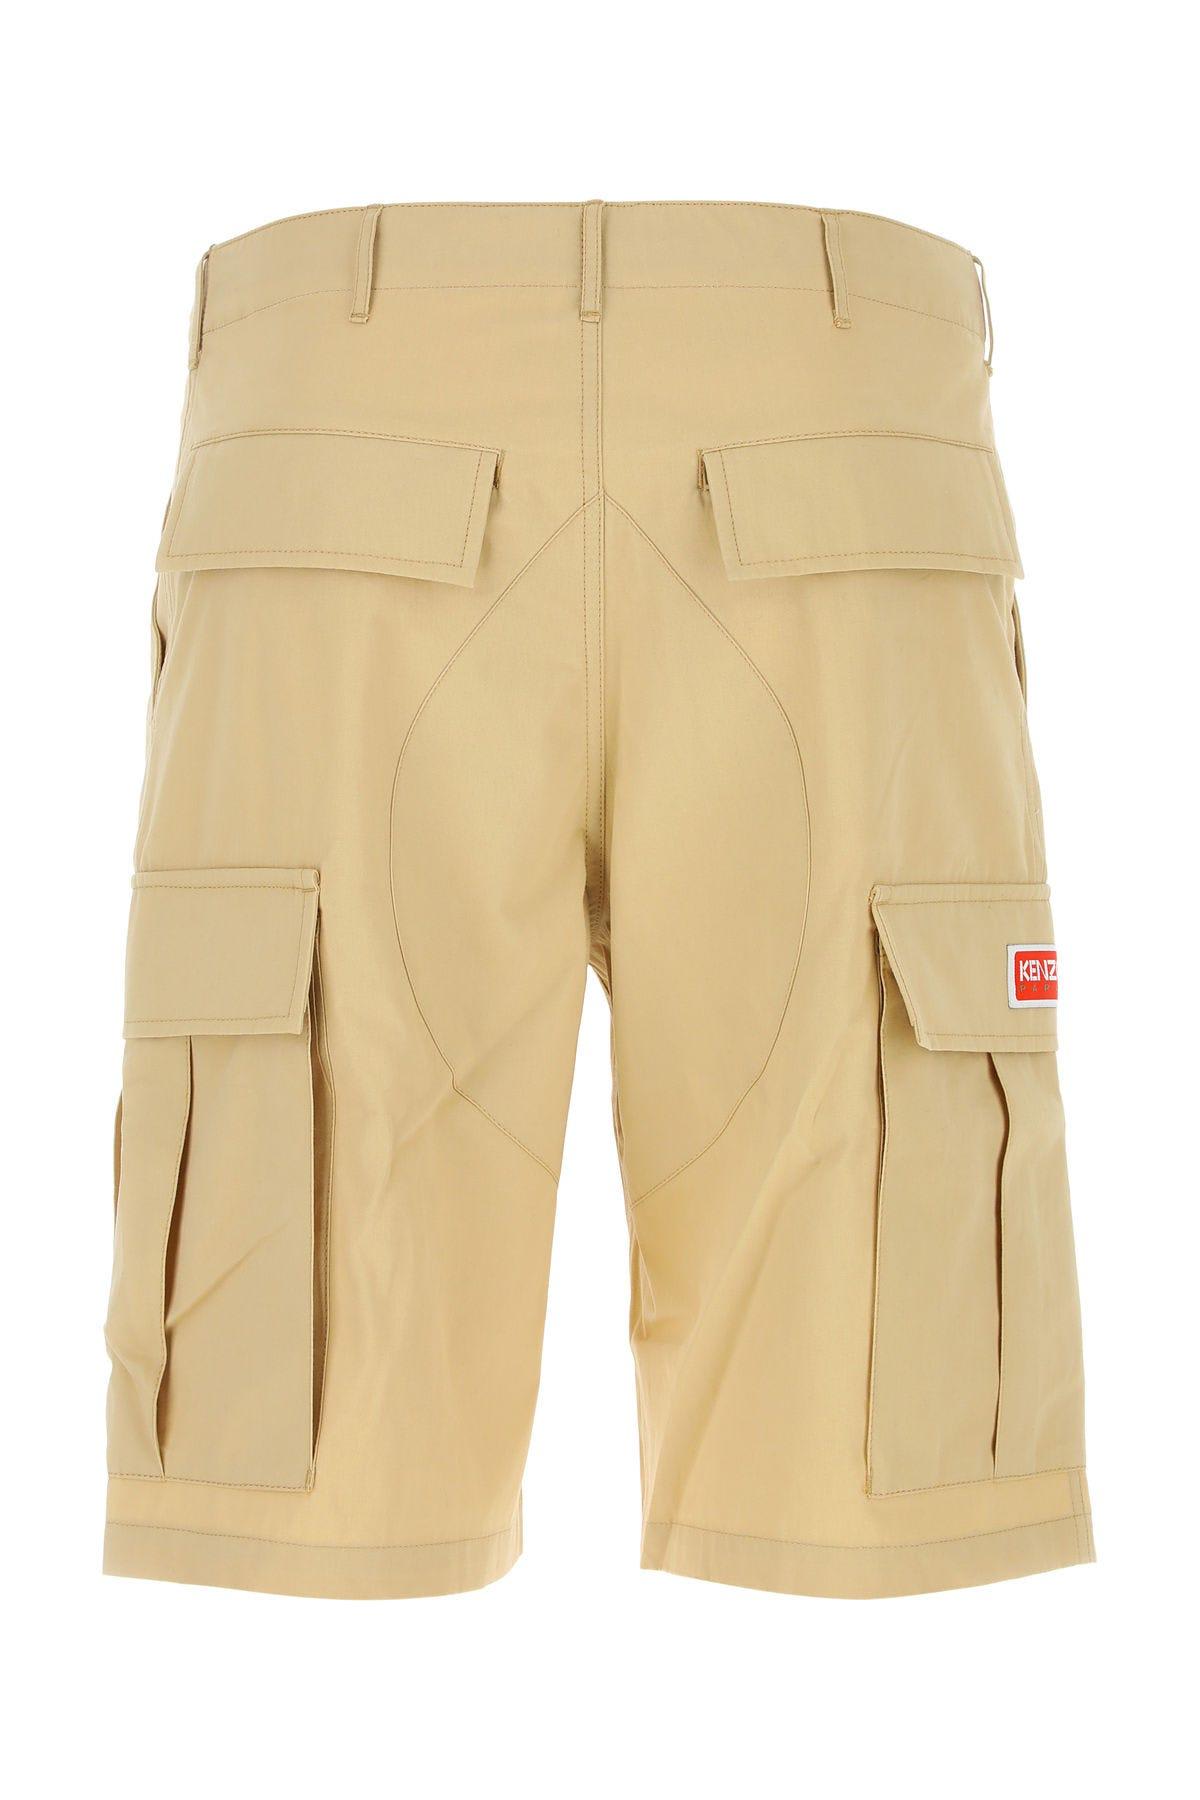 Shop Kenzo Beige Cotton Bermuda Shorts